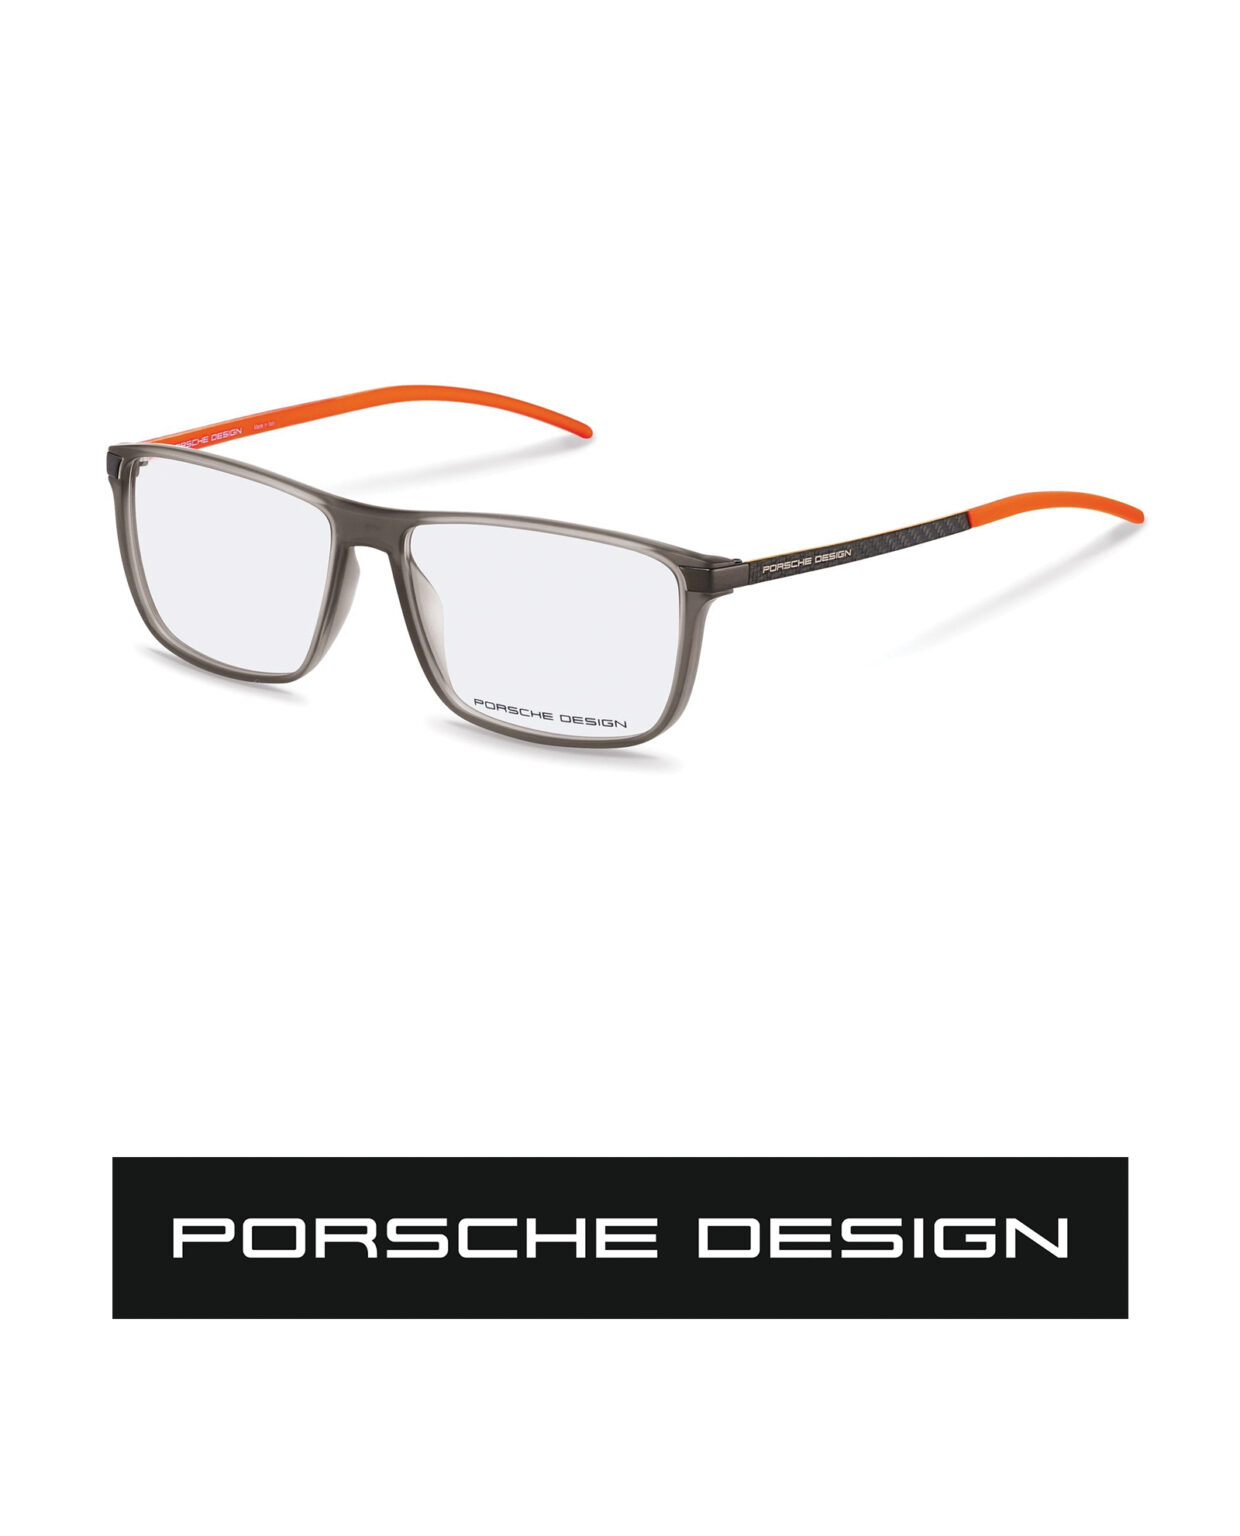 Porsche Design 8327 E | Oculus Optika